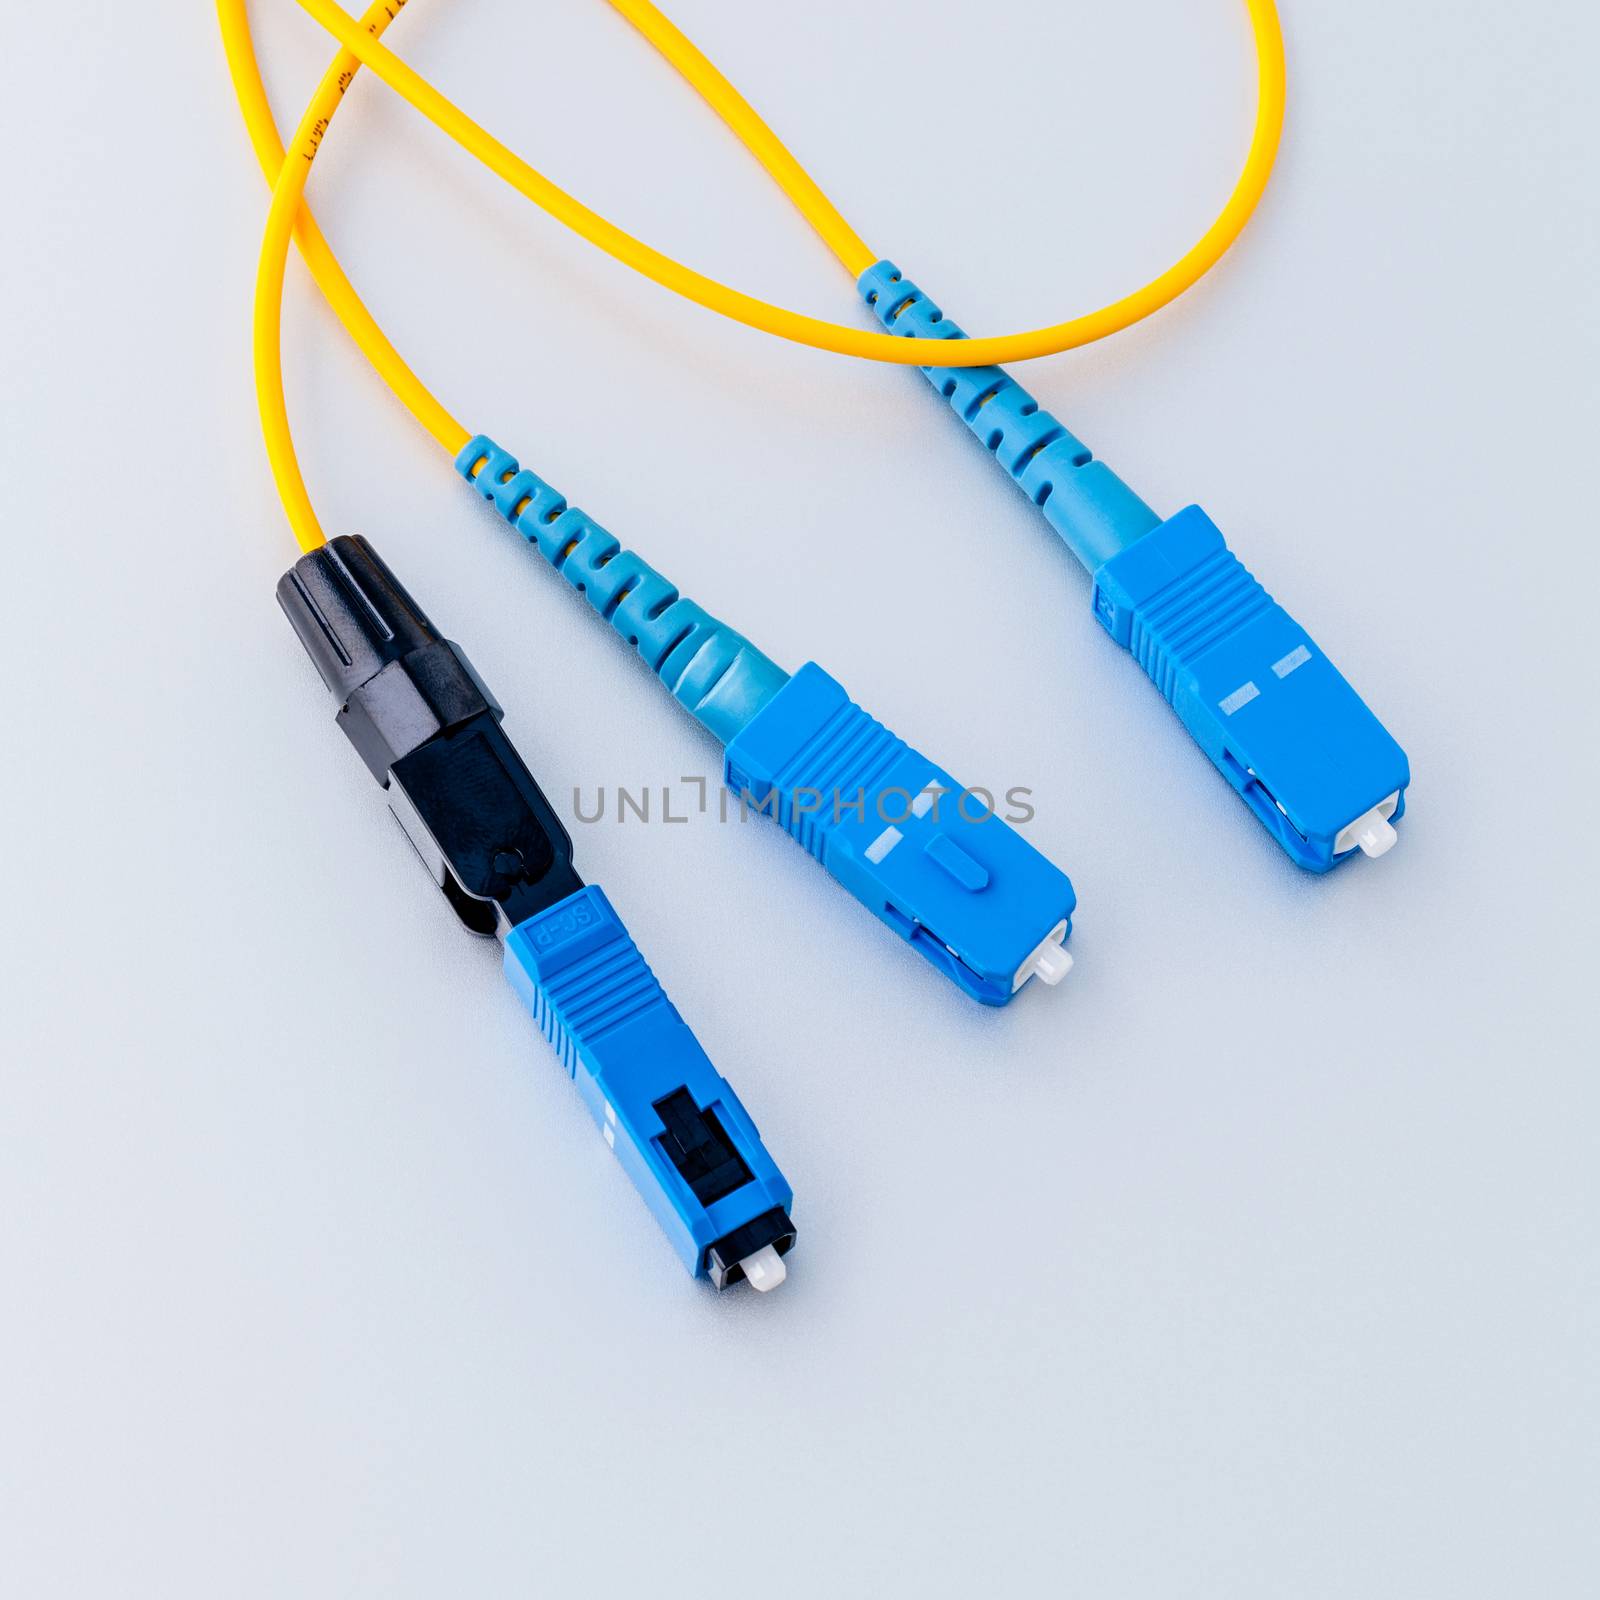 Fiber Optics connectors symbolic photo for fast internet connect by kerdkanno